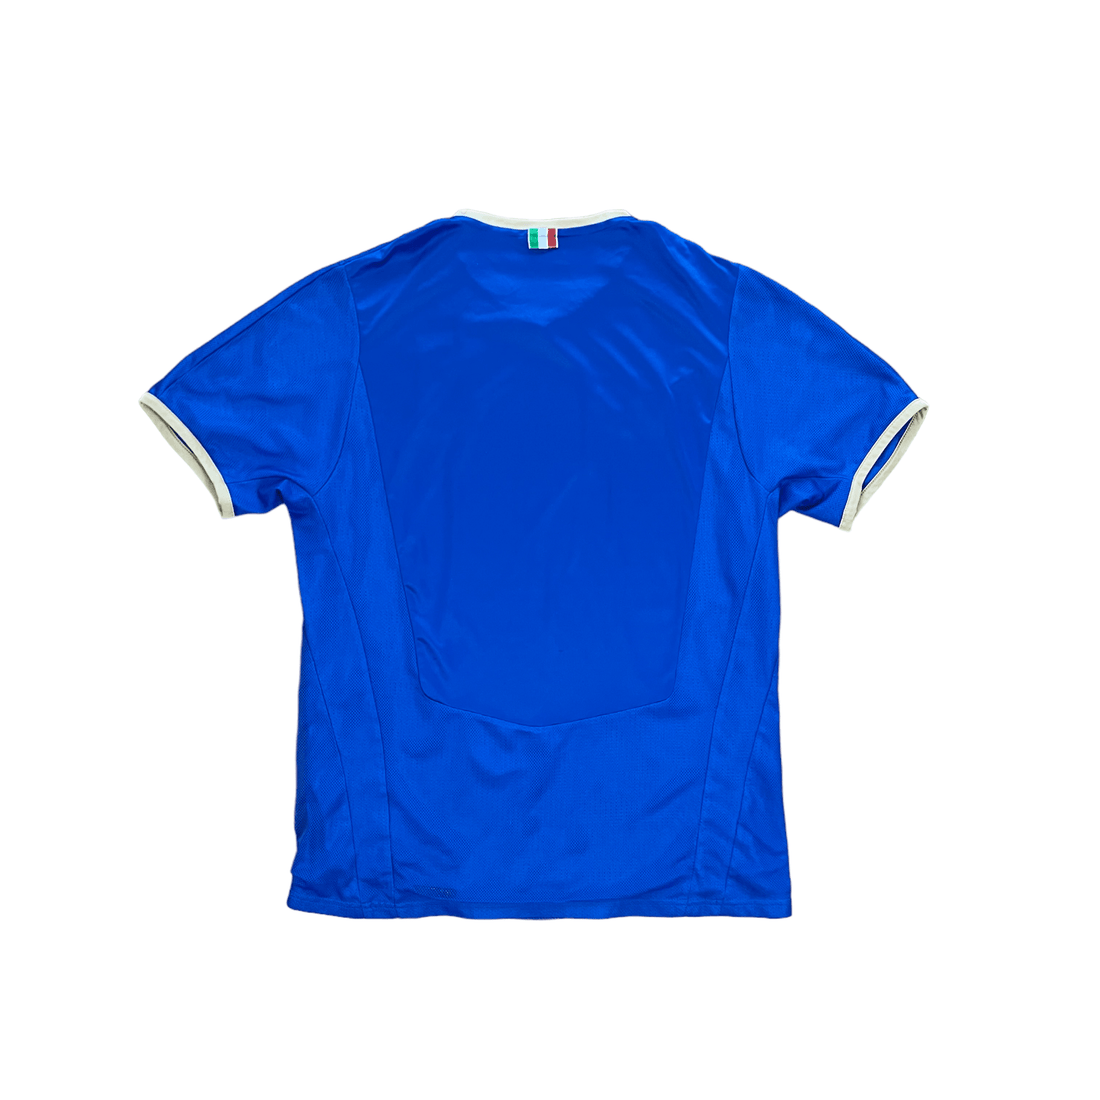 2008-09 Blue Puma Italy Football Tee - Small - The Streetwear Studio